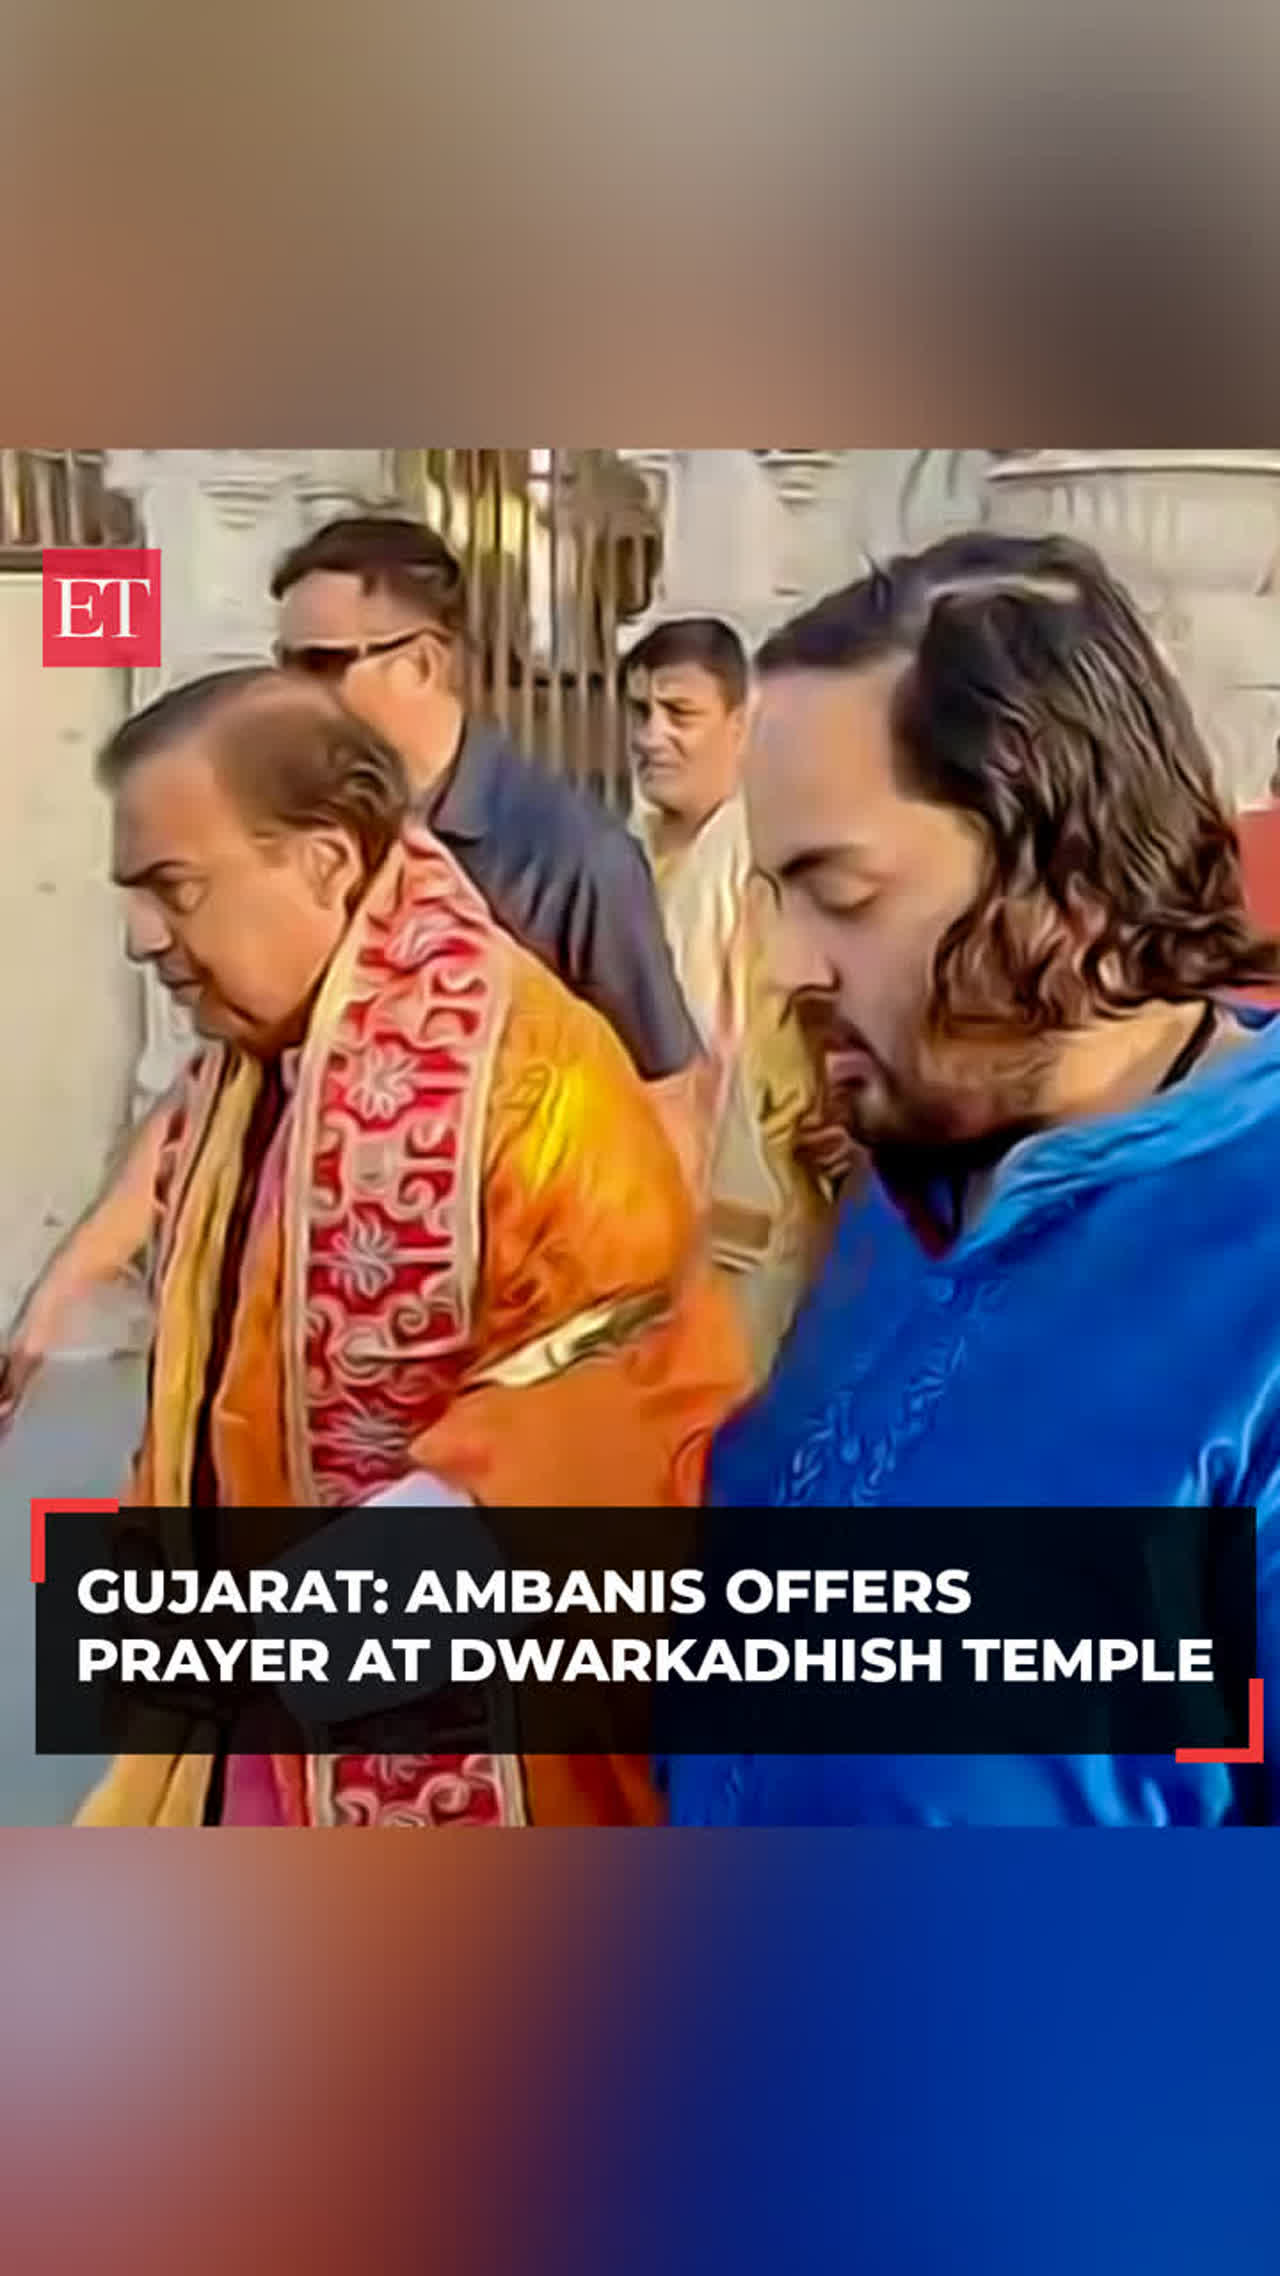 Mukesh Ambani, along with his son Anant, offer prayers at Dwarkadhish Temple in Gujarat